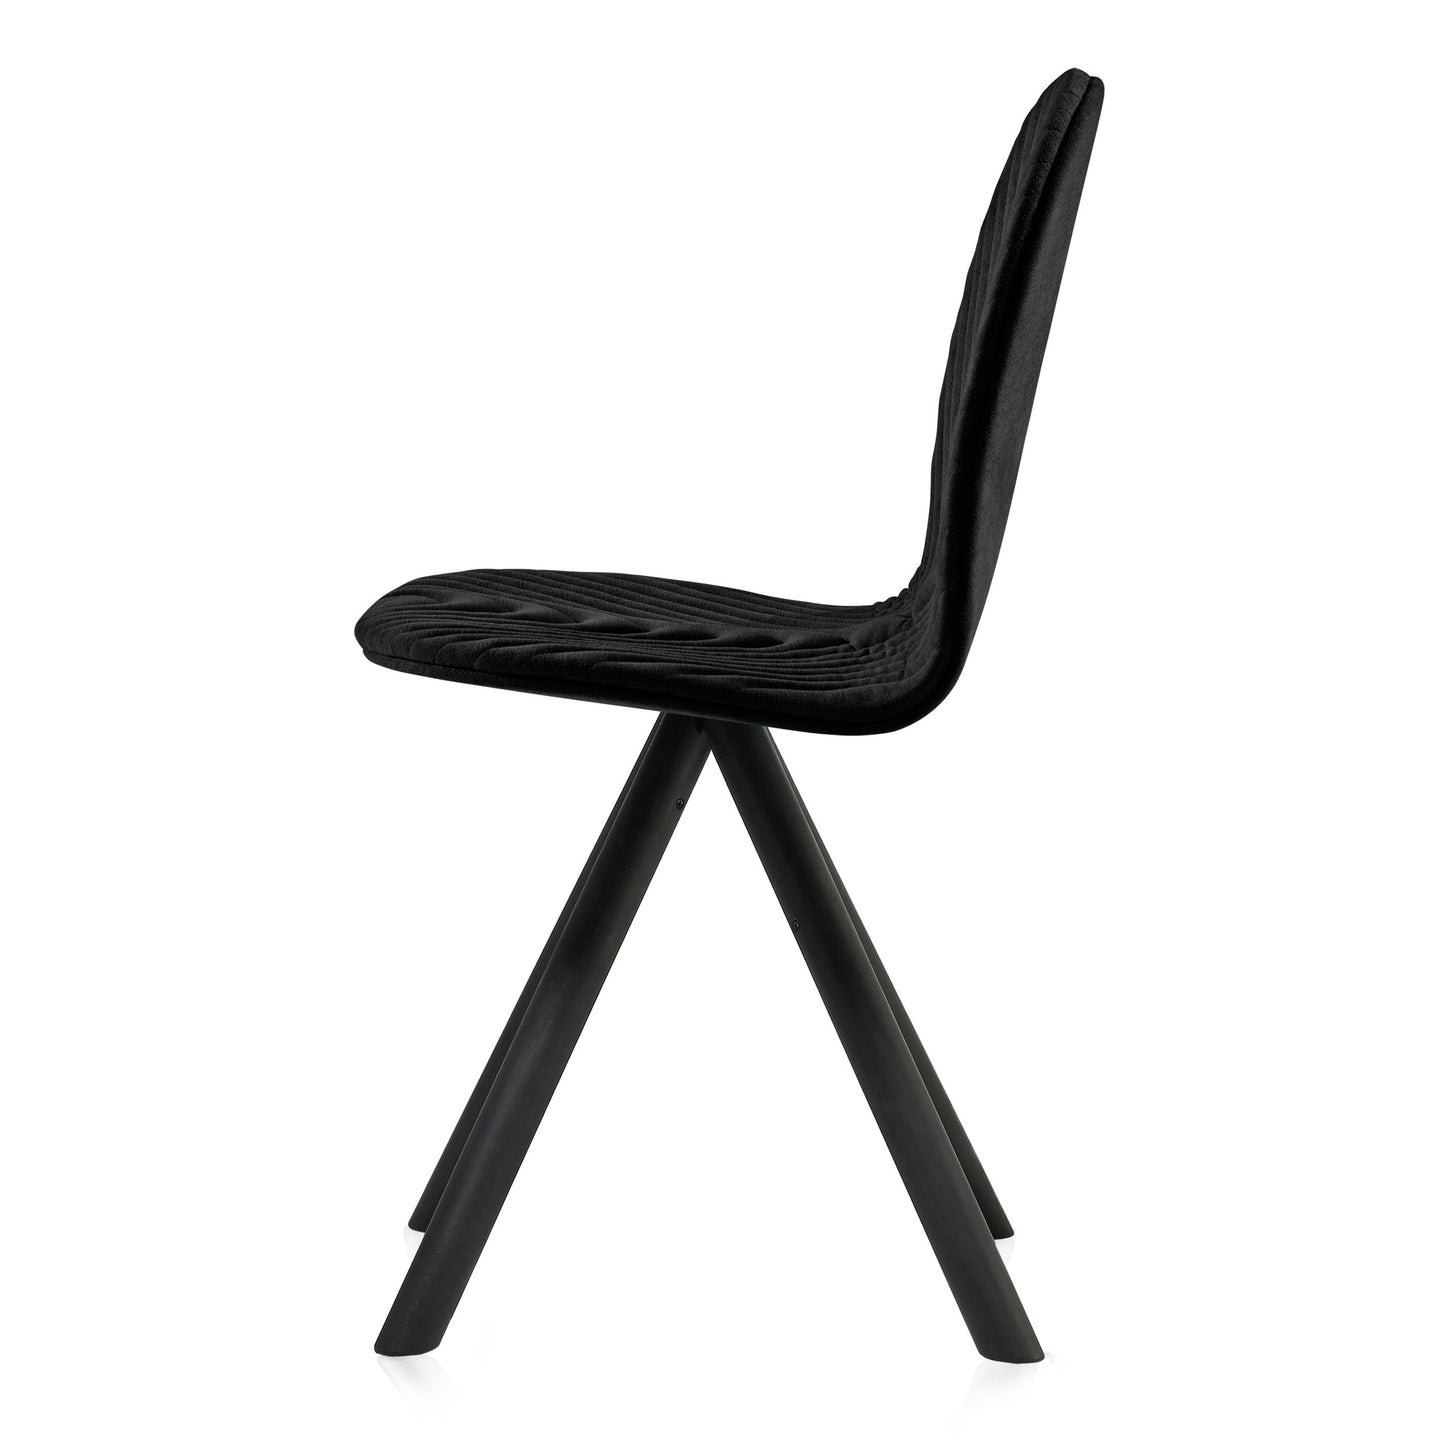 Chair Mannequin 01 black - Black